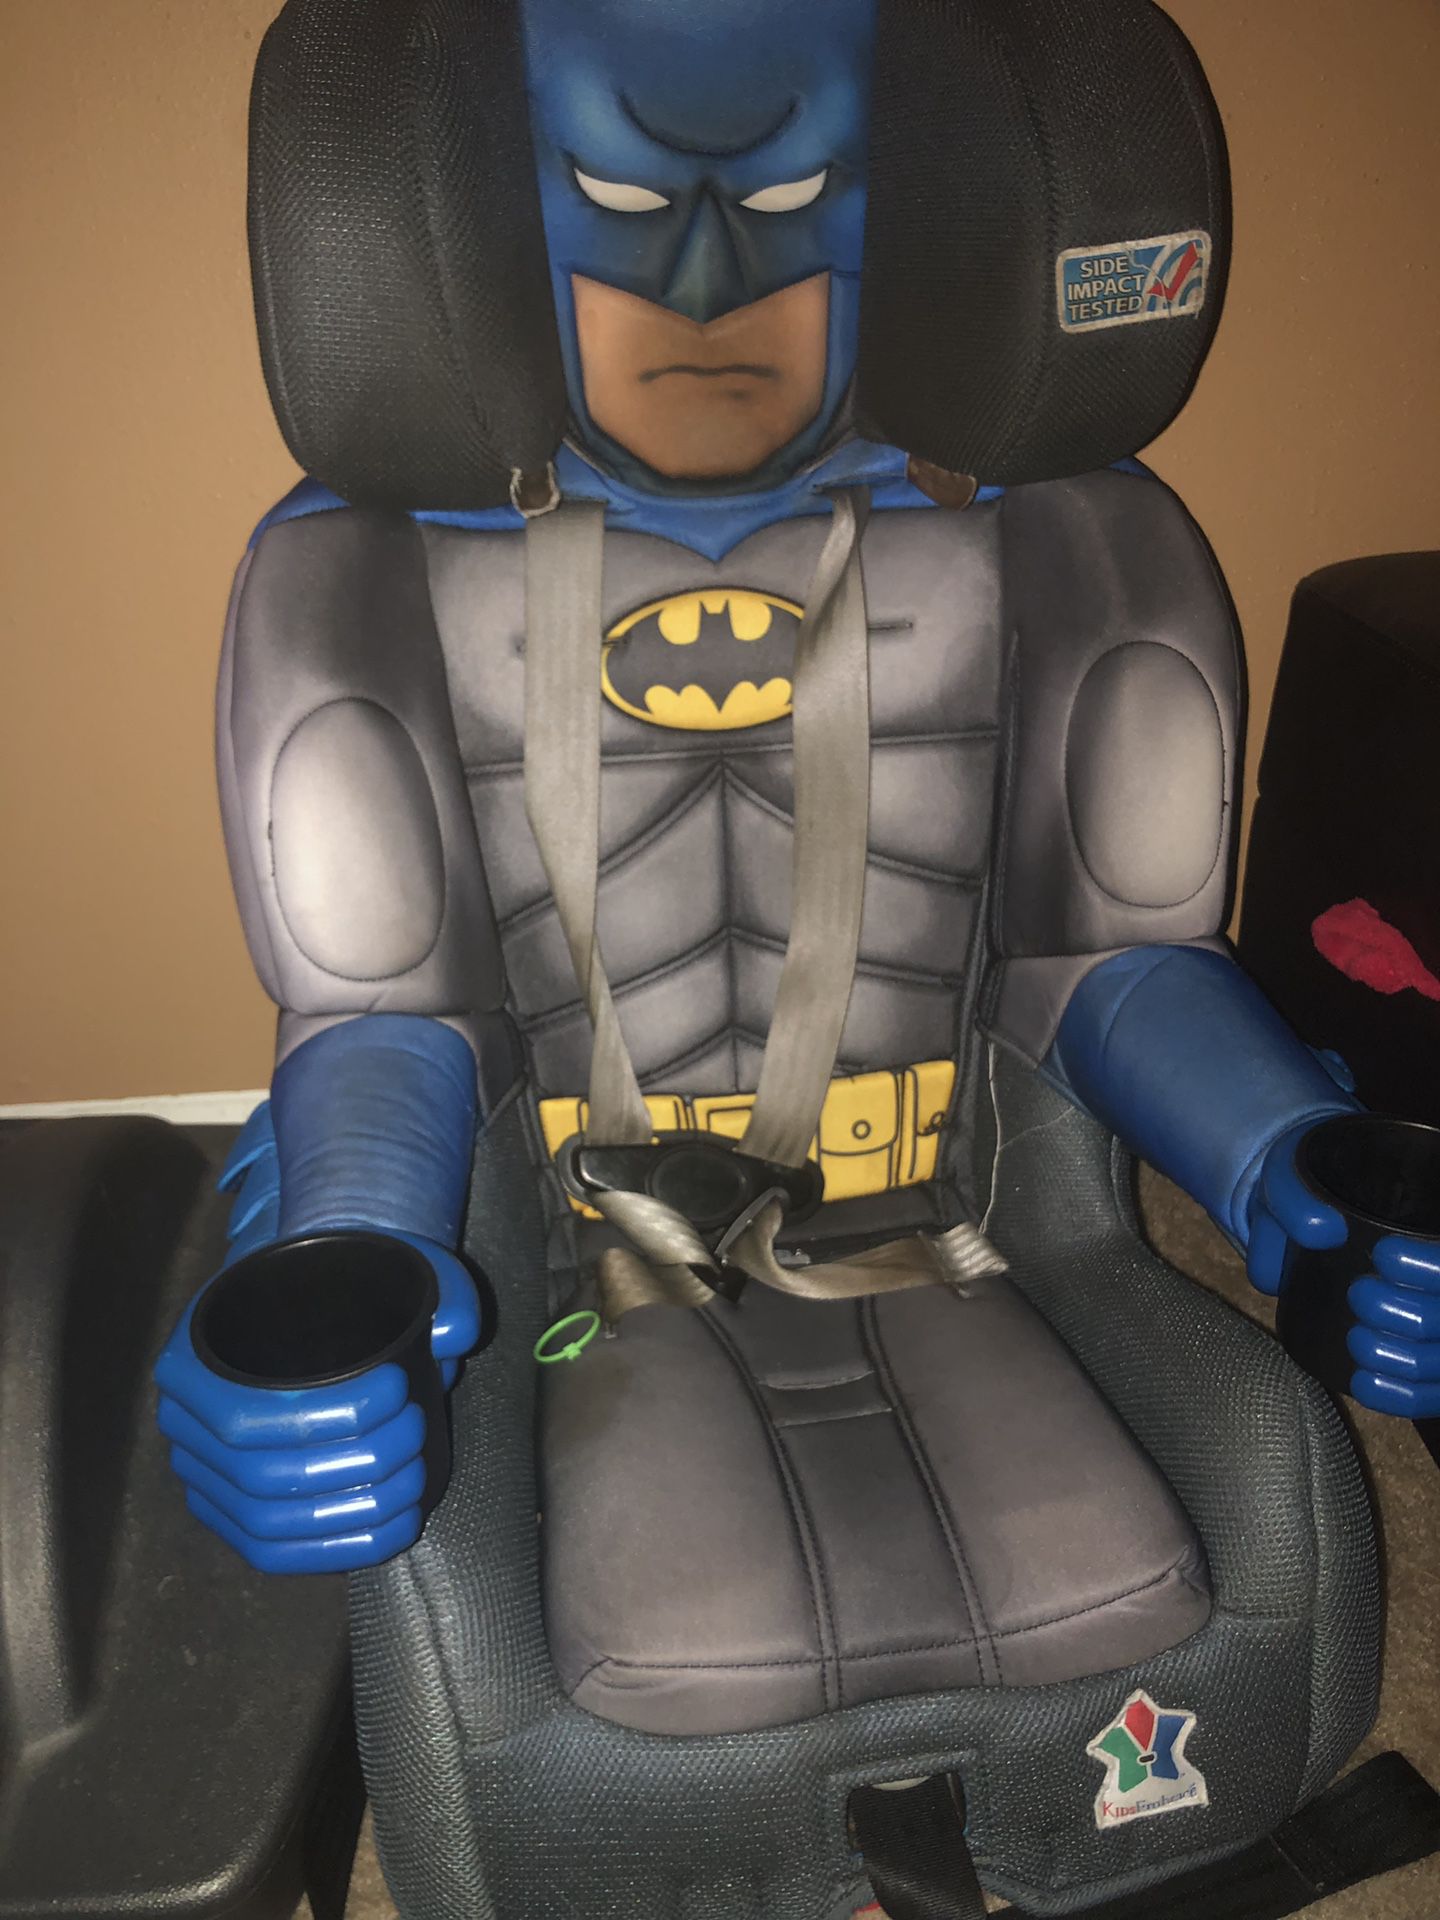 Batman booster car seat